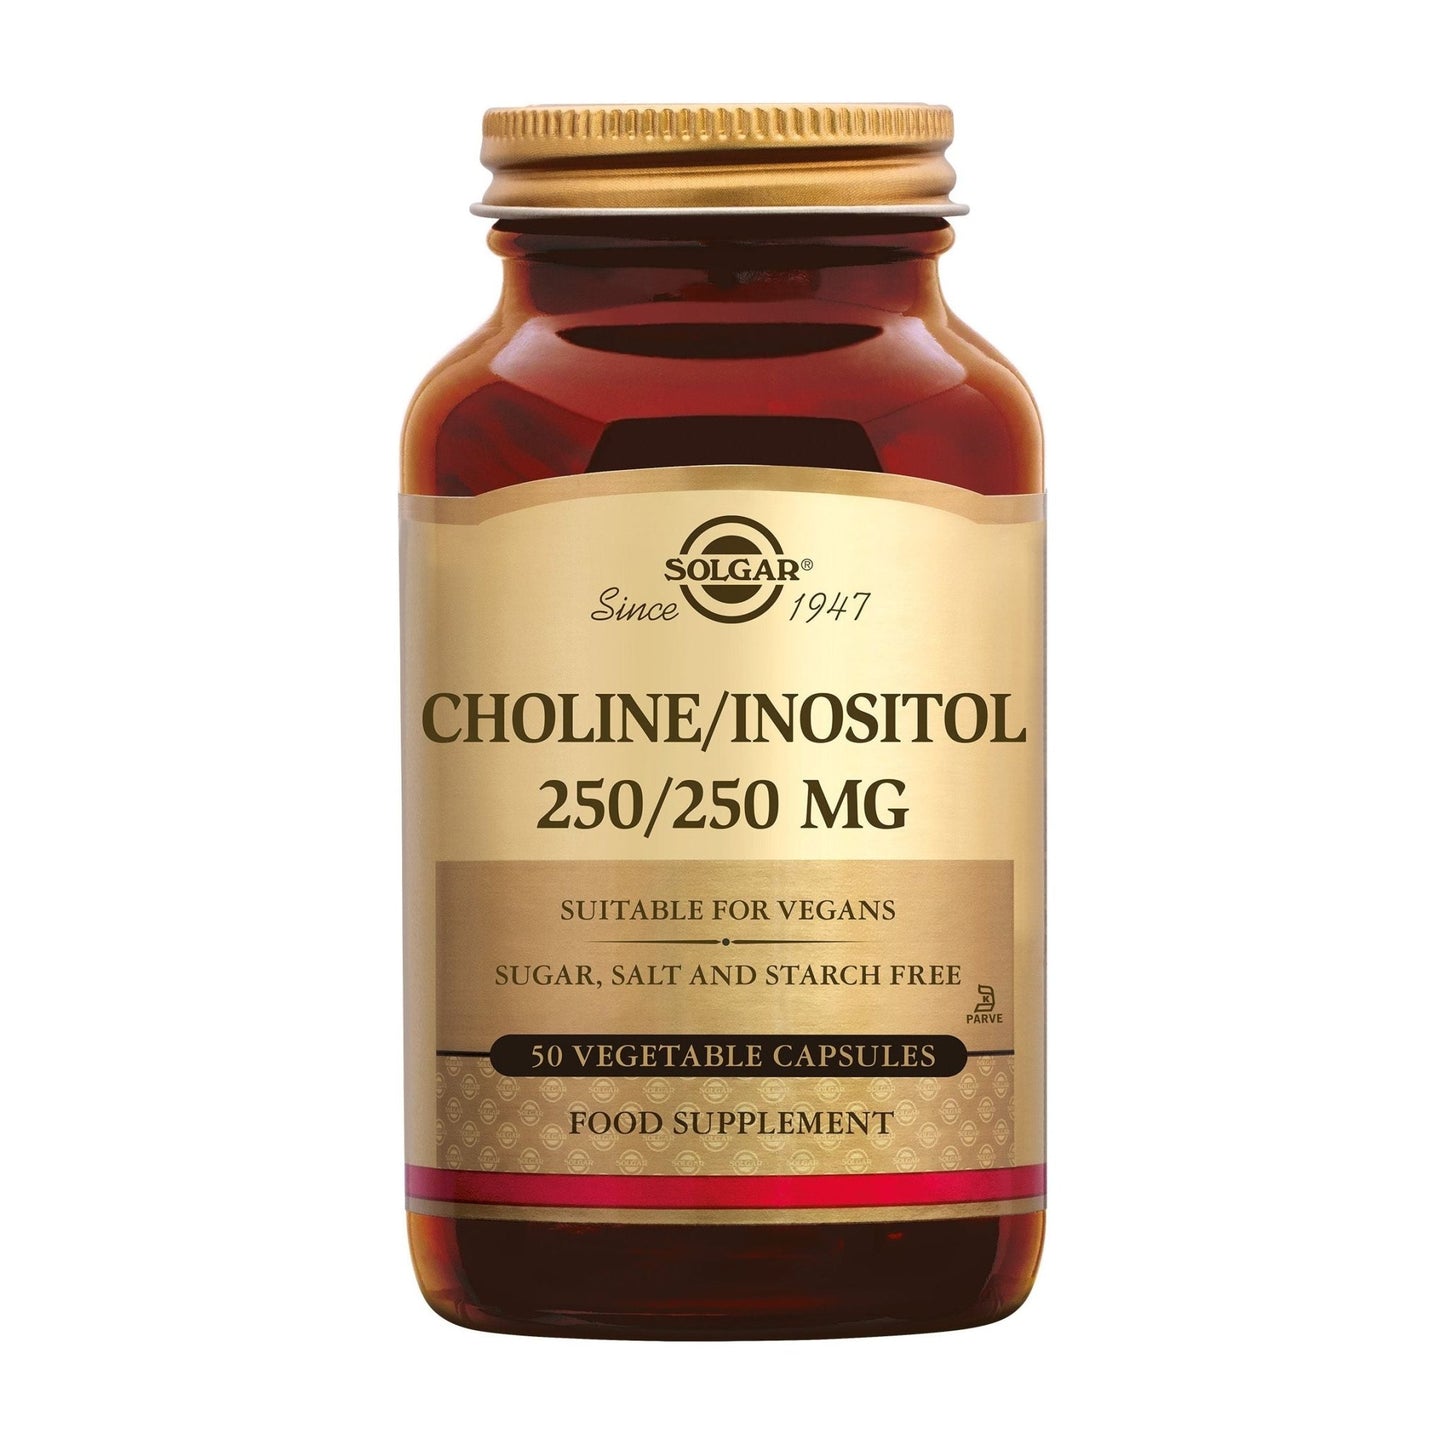 Choline/Inositol 250/250 mg Supplement Solgar   